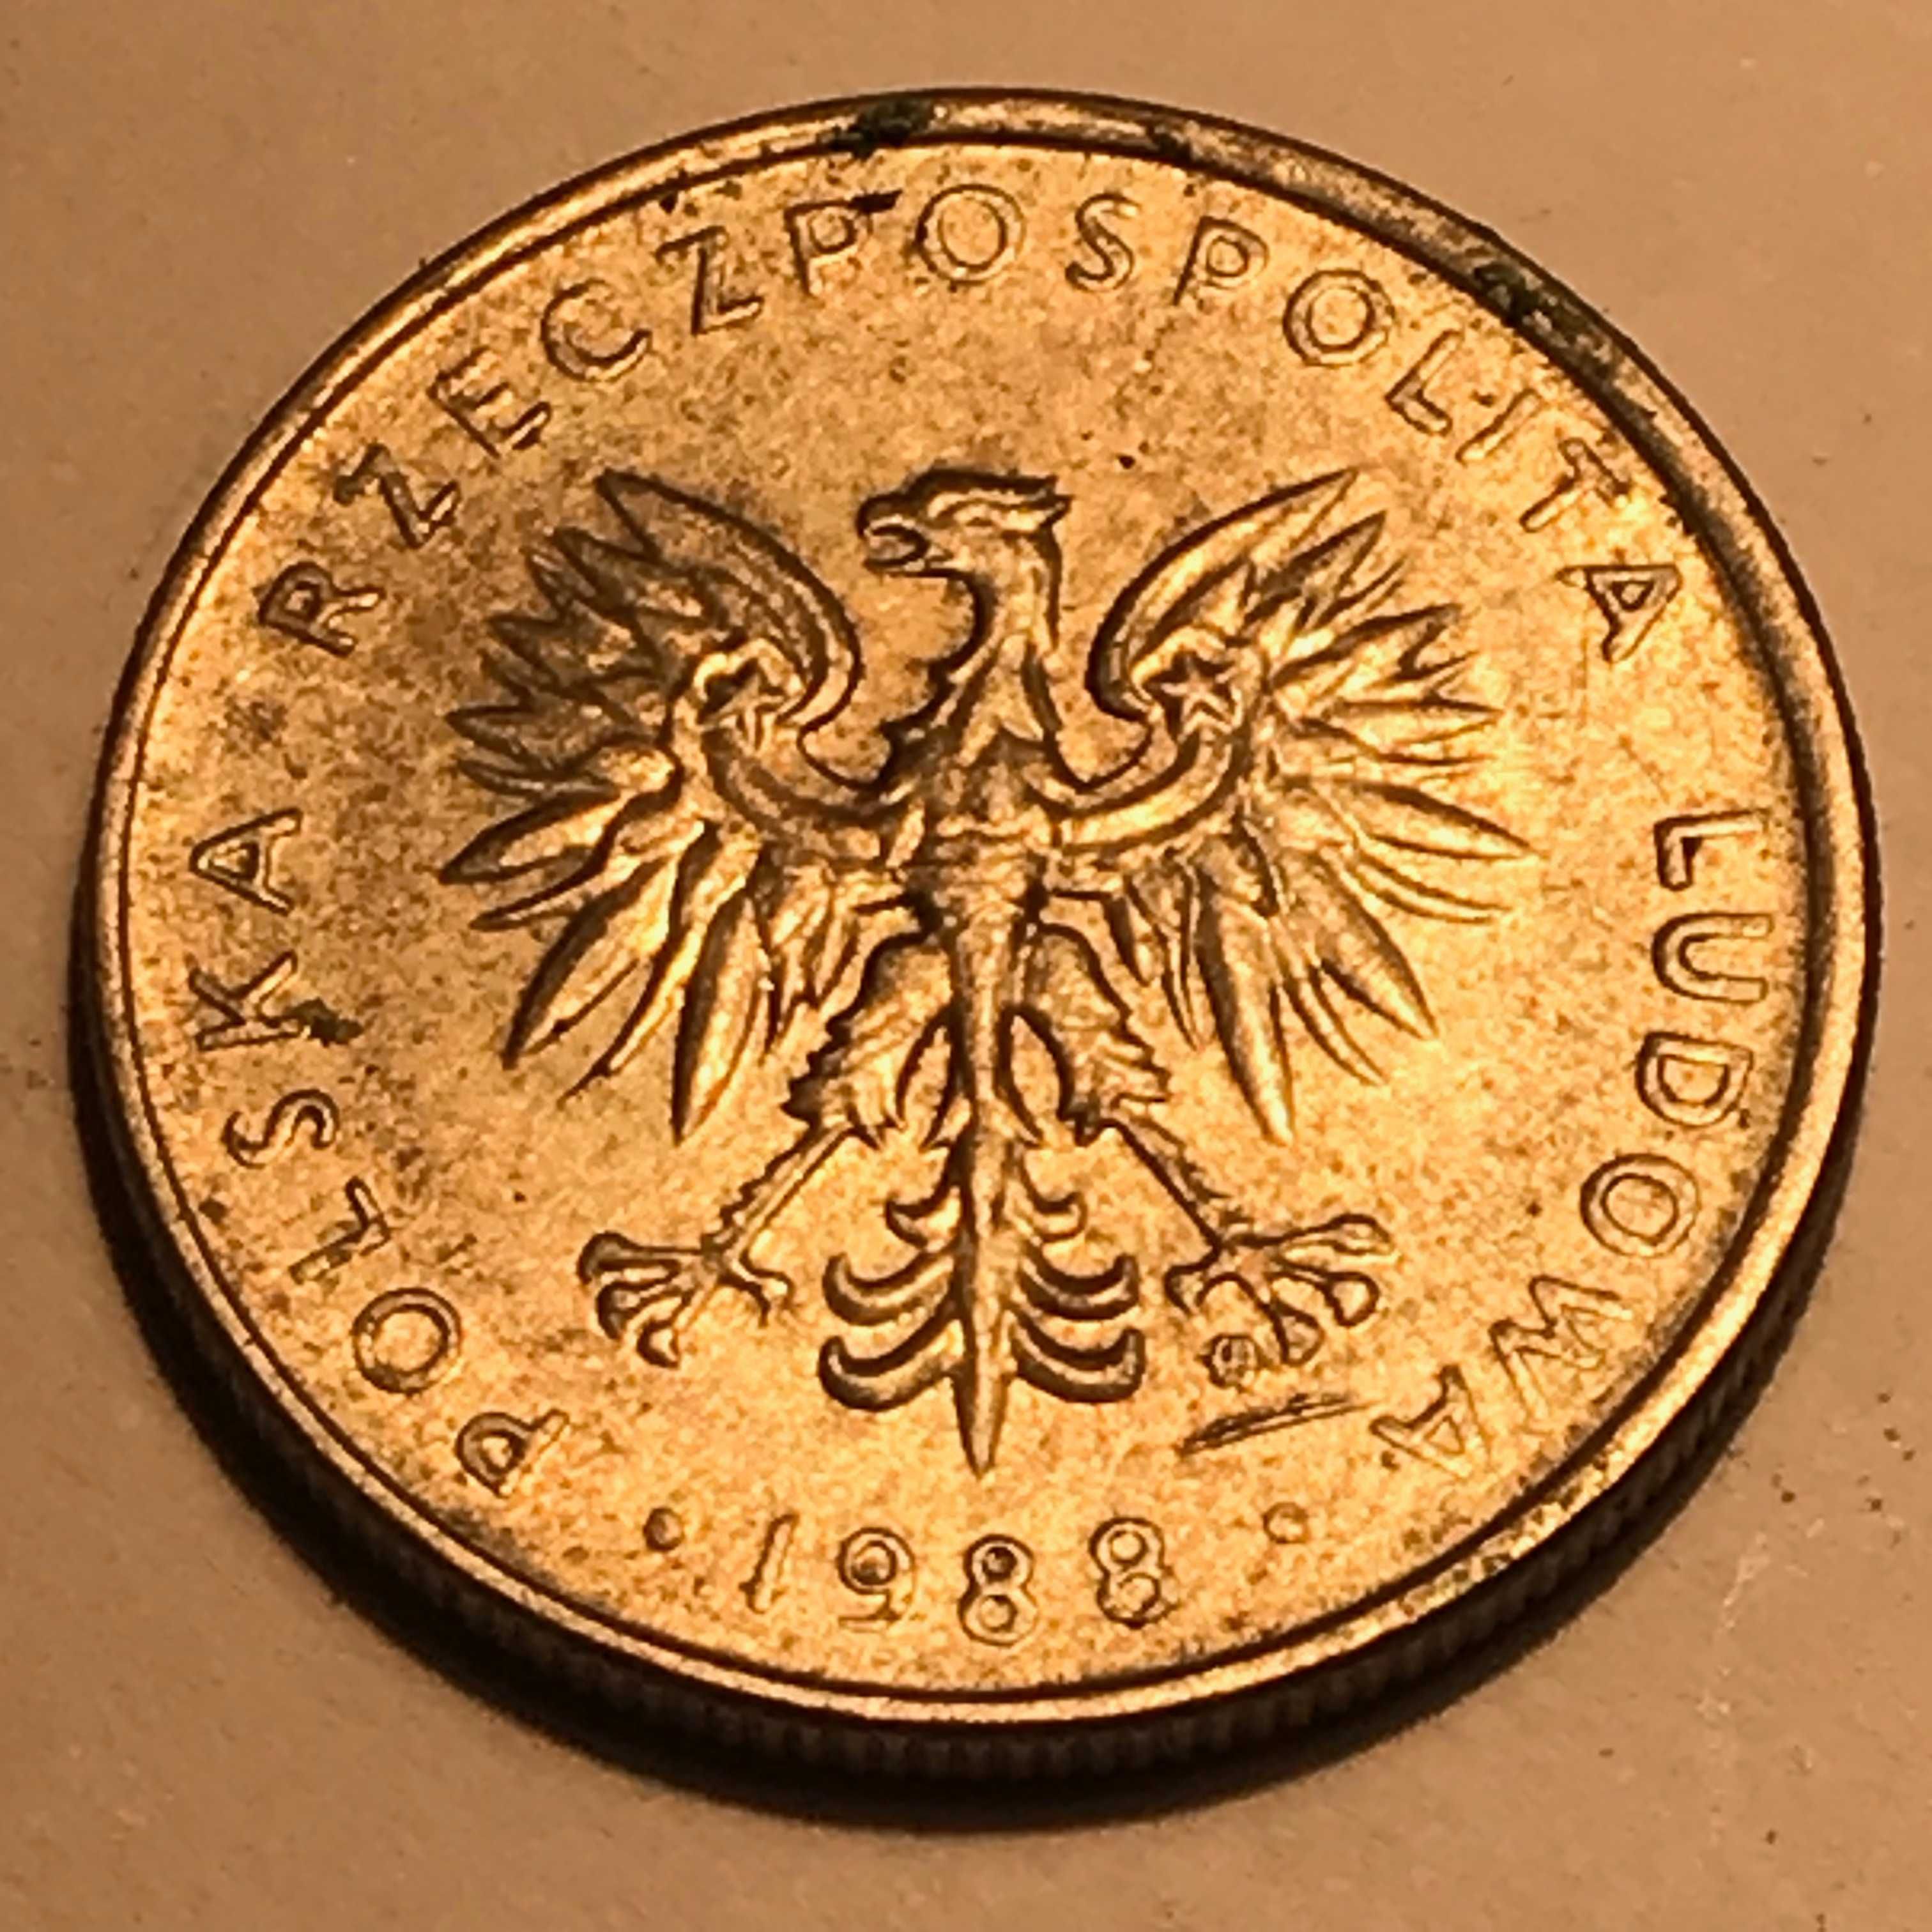 Moneta 10 zł - 1988 rok